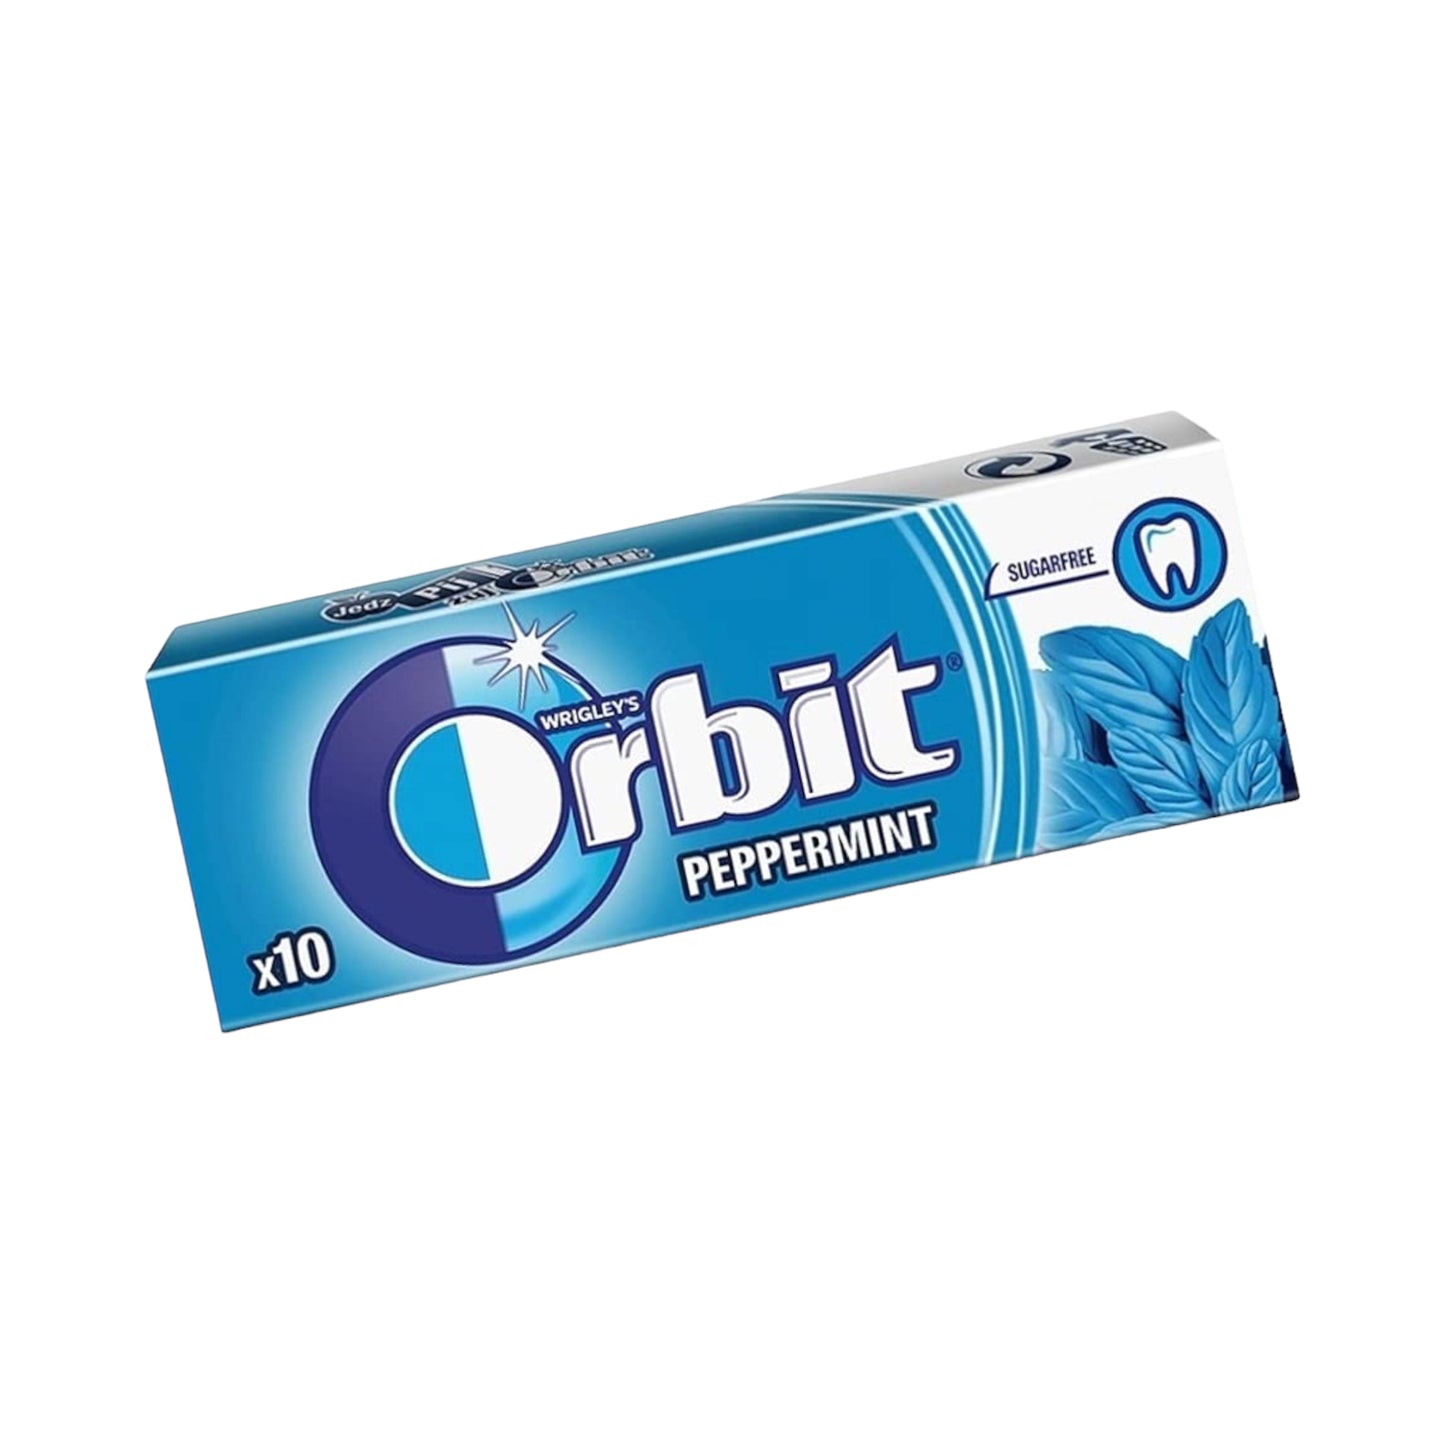 Orbit Sugar-Free Chewing Gum Peppermint - 10 piece pack (14g)